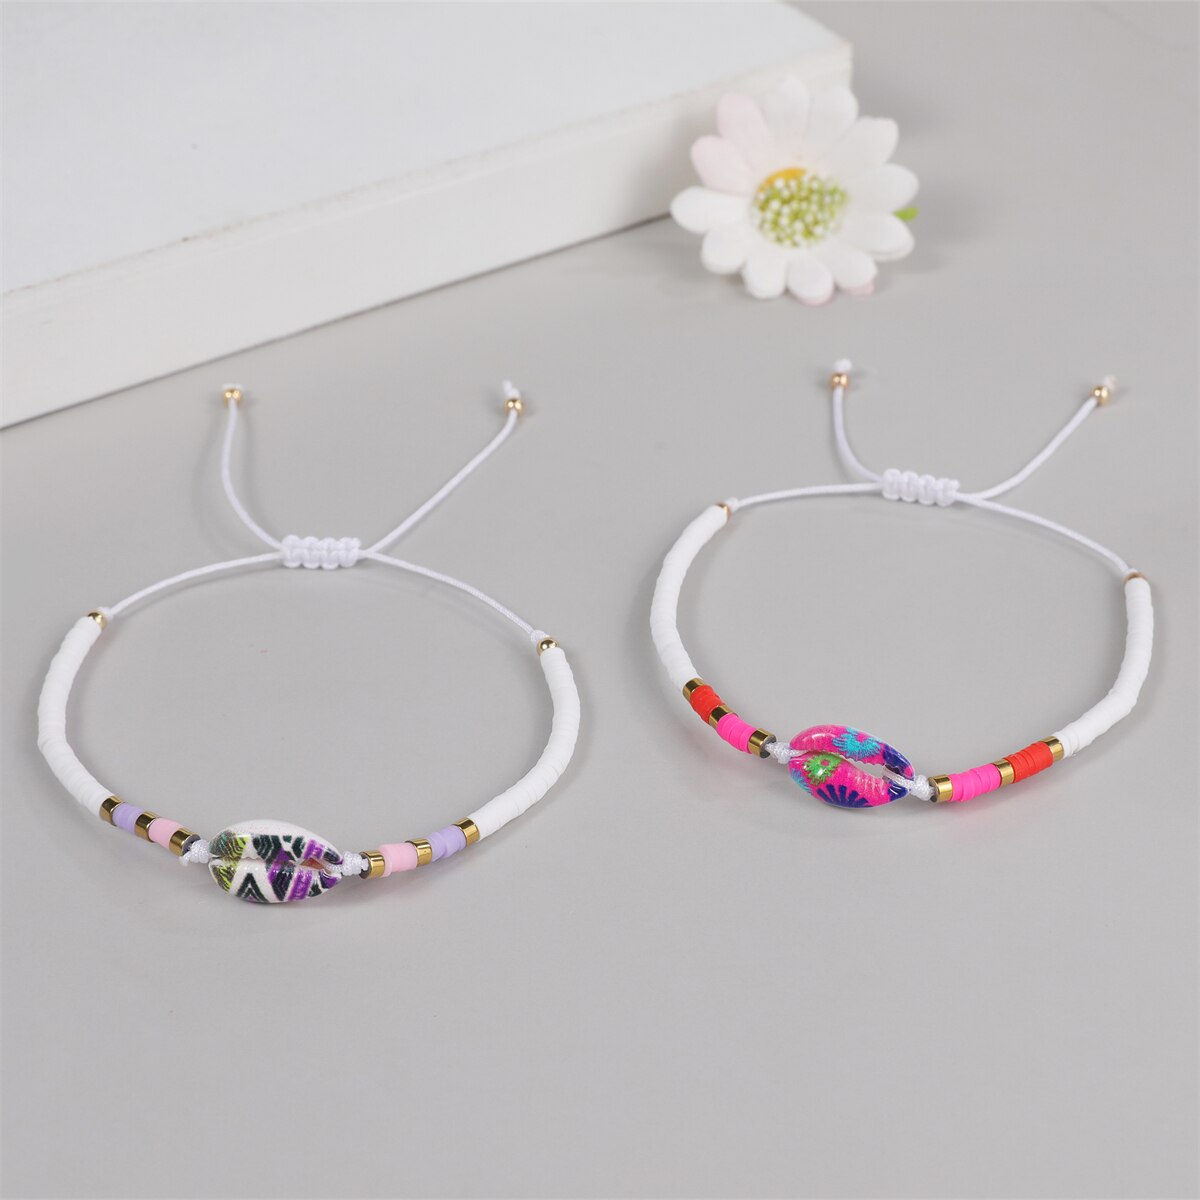 12pcs/set Soft Clay Shell Charm Bracelets Set for Women Kids Handmade Braided Rope Adjustable Bracelet Anklets Trendy Jewelry